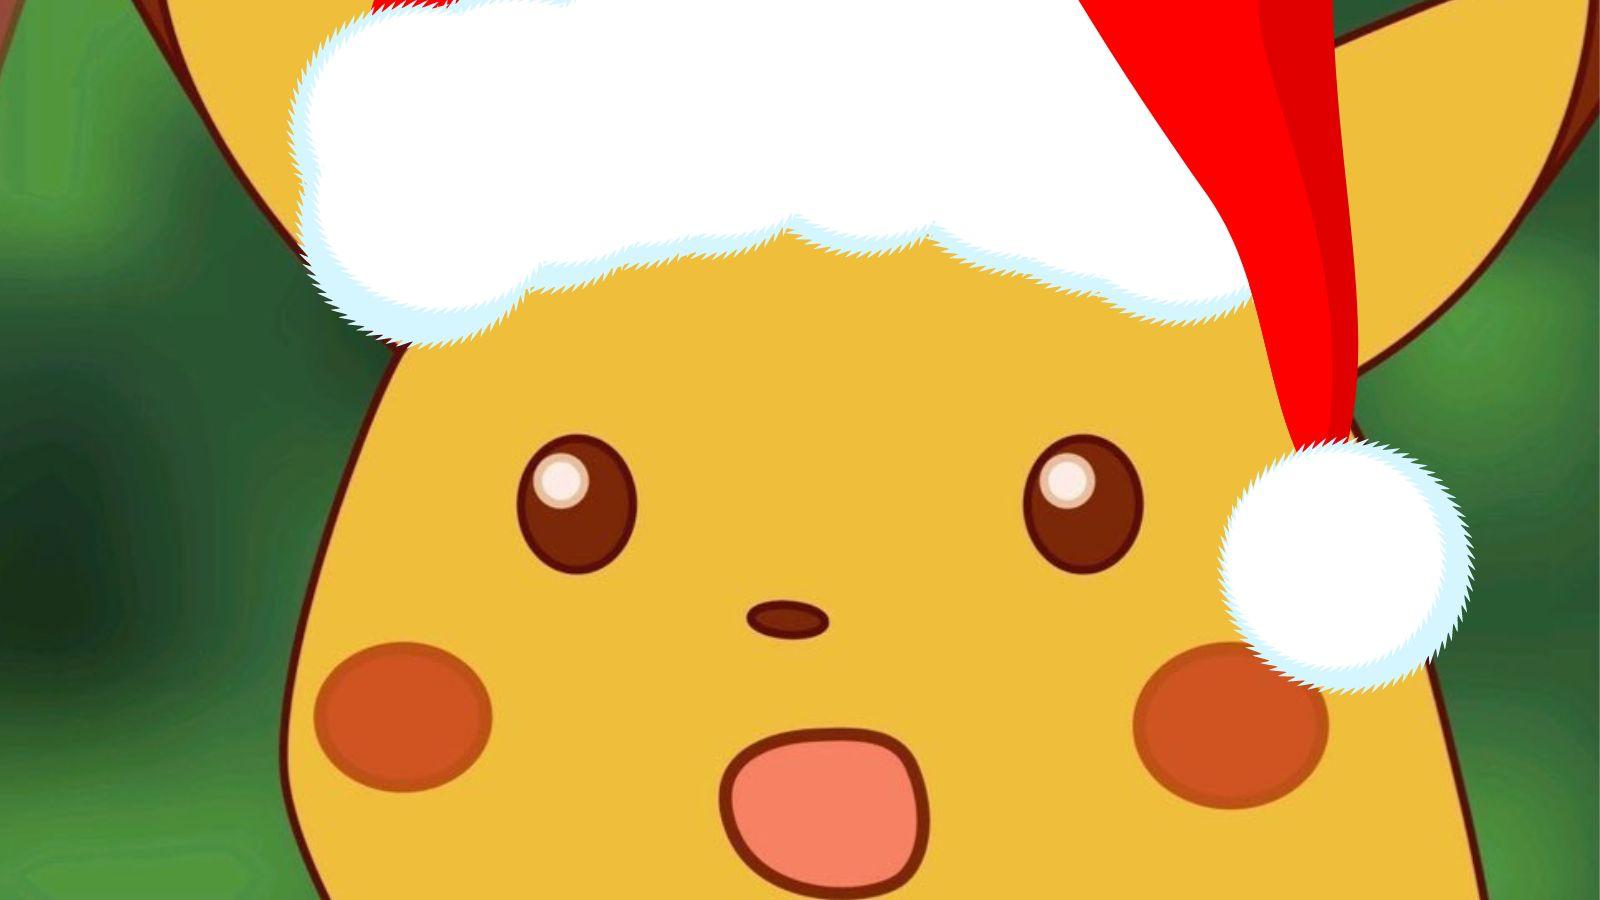 Pokemon Holiday Advent Calendar 2023 New In Hand